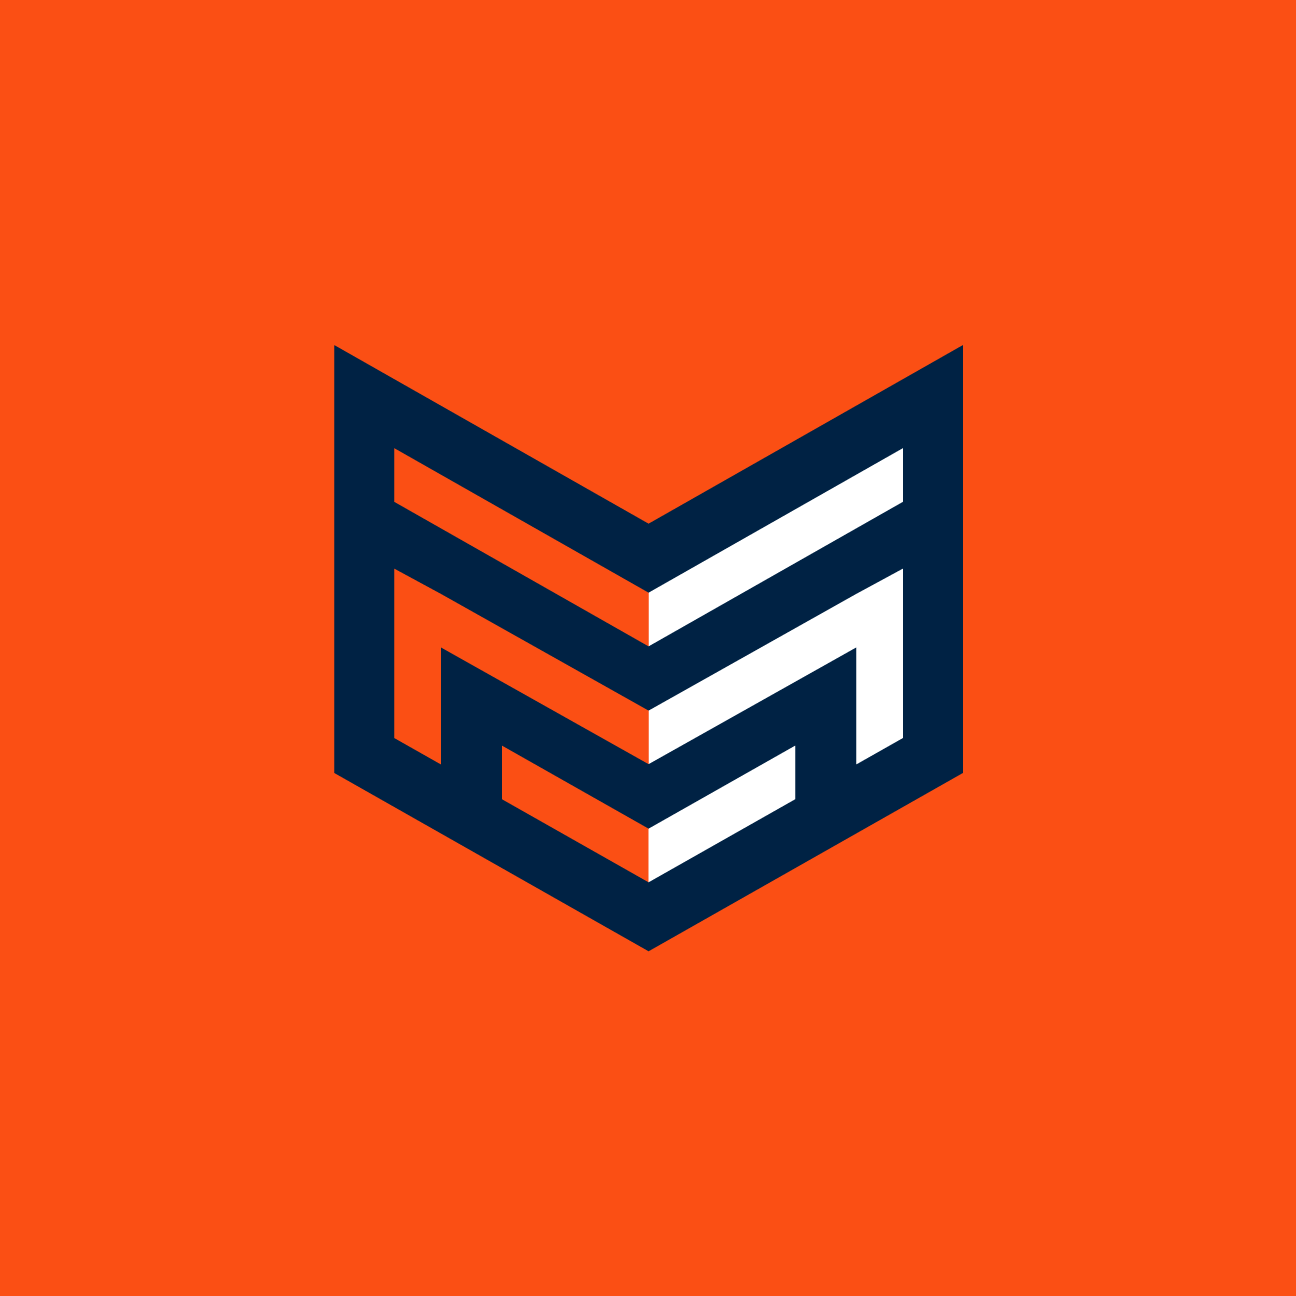 Blue and Orange Team Logo - New logos for 10 NFL stars - Tom Brady, Rob Gronkowski of New